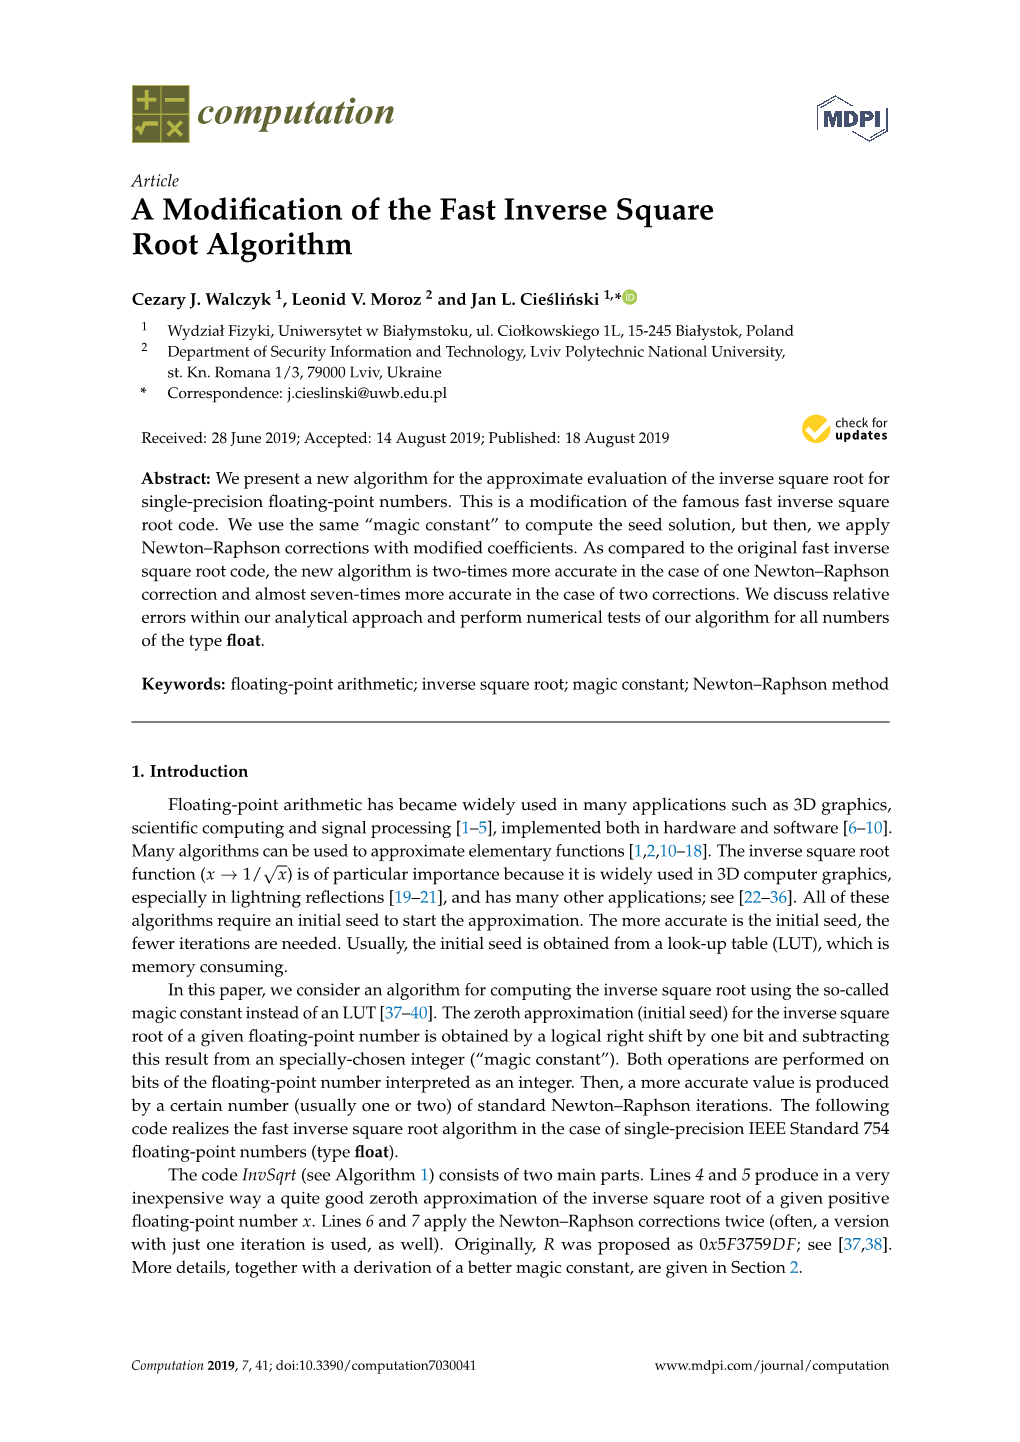 A Modification of the Fast Inverse Square Root Algorithm